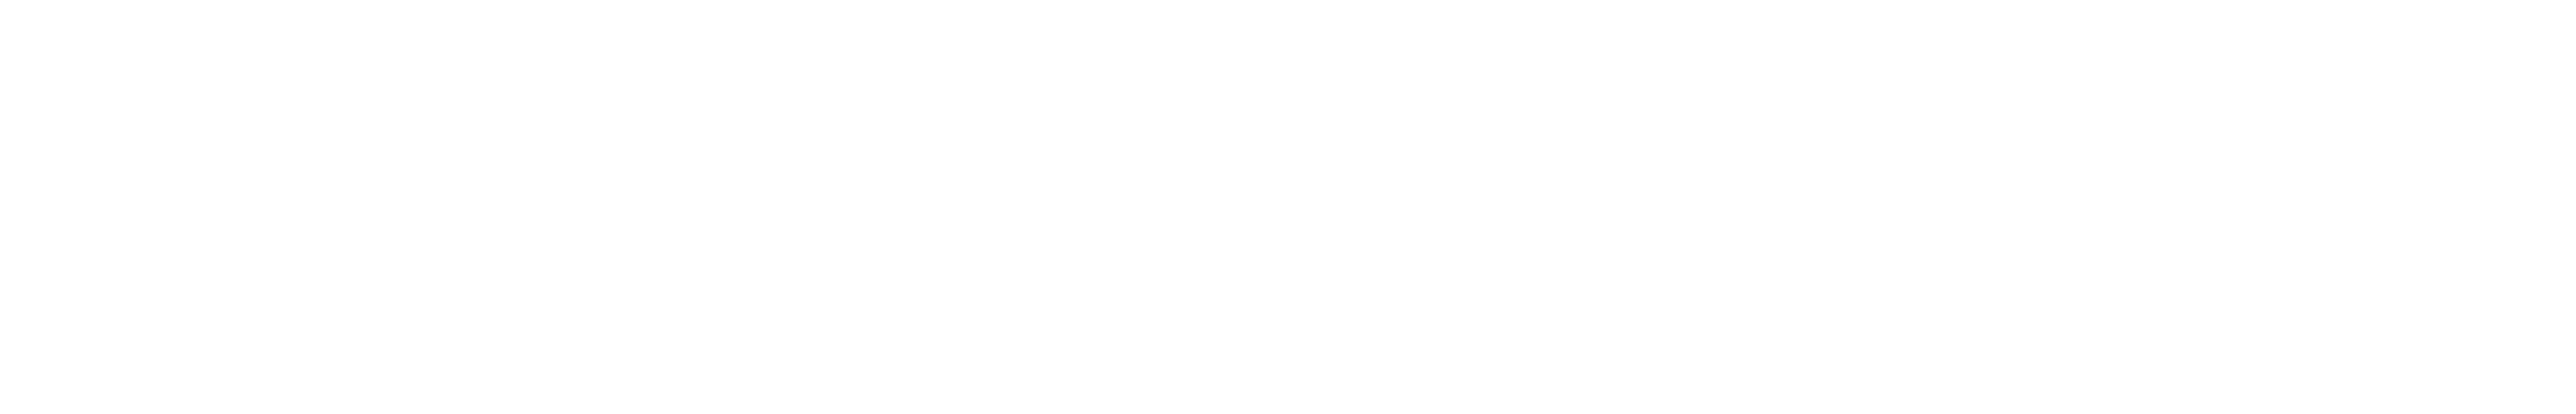 Restaurants.mu - Mauritius No.1 Restaurants Guide